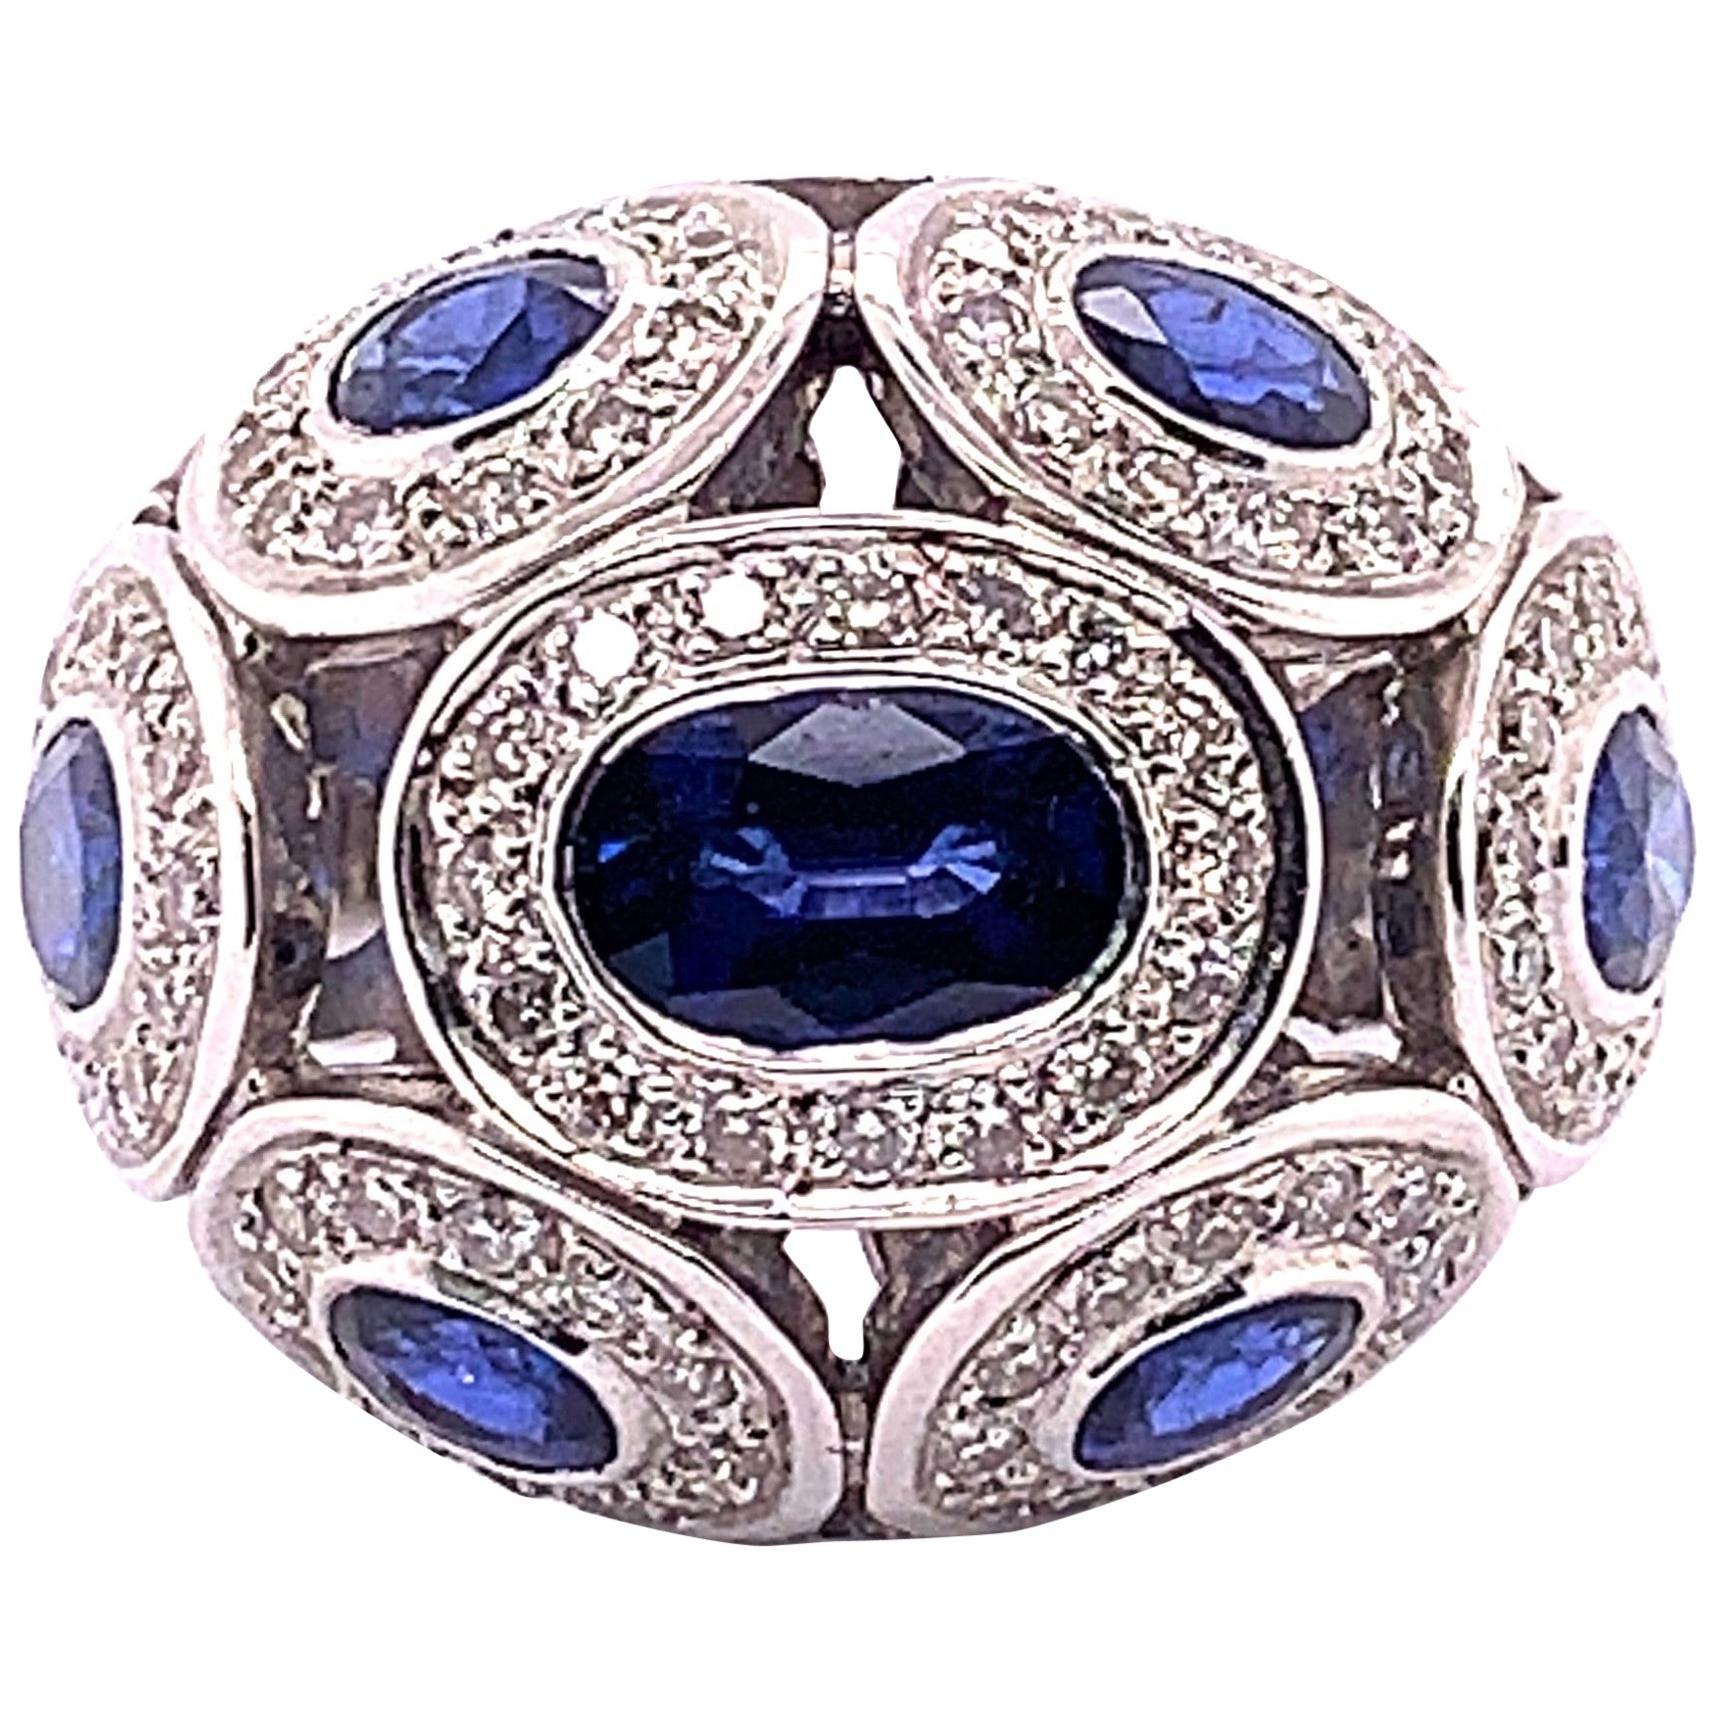 4.63 Carat Blue Oval Sapphire and Diamond Ring